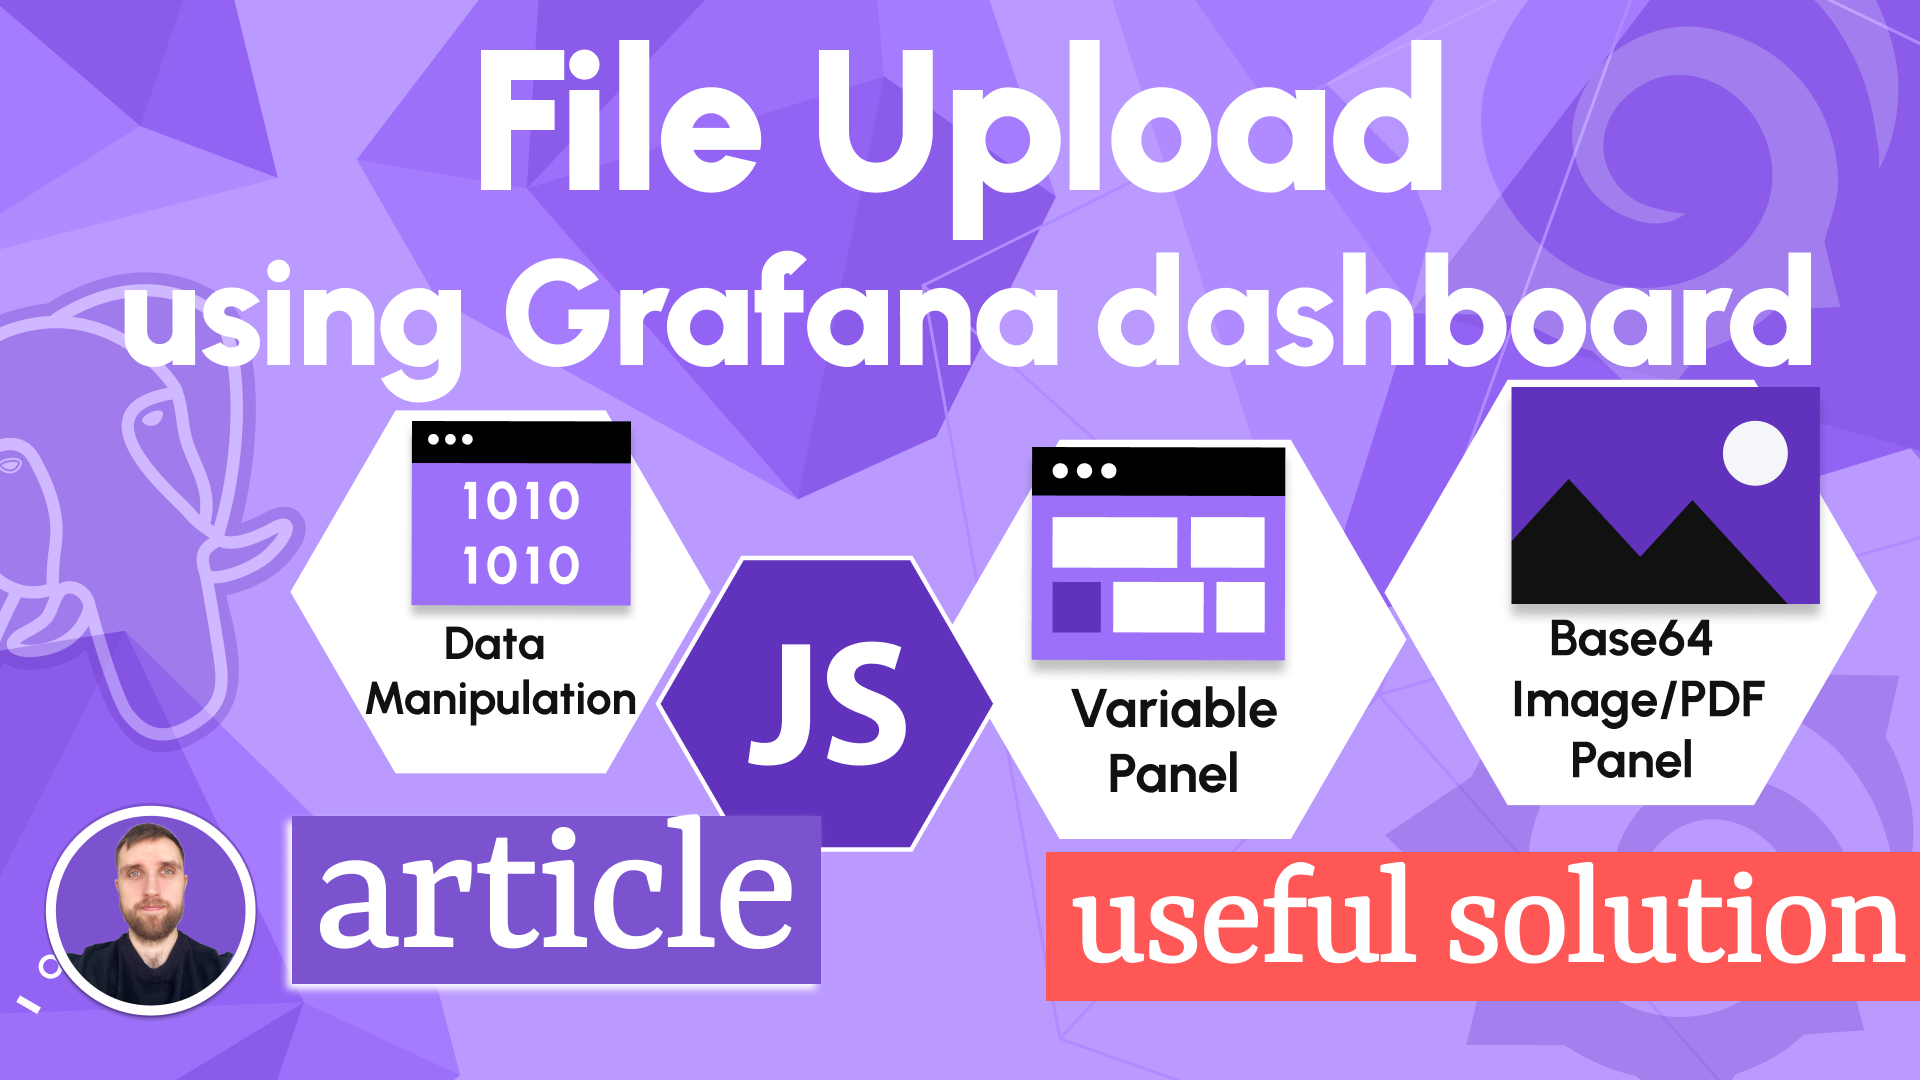 File upload using the Grafana dashboard.